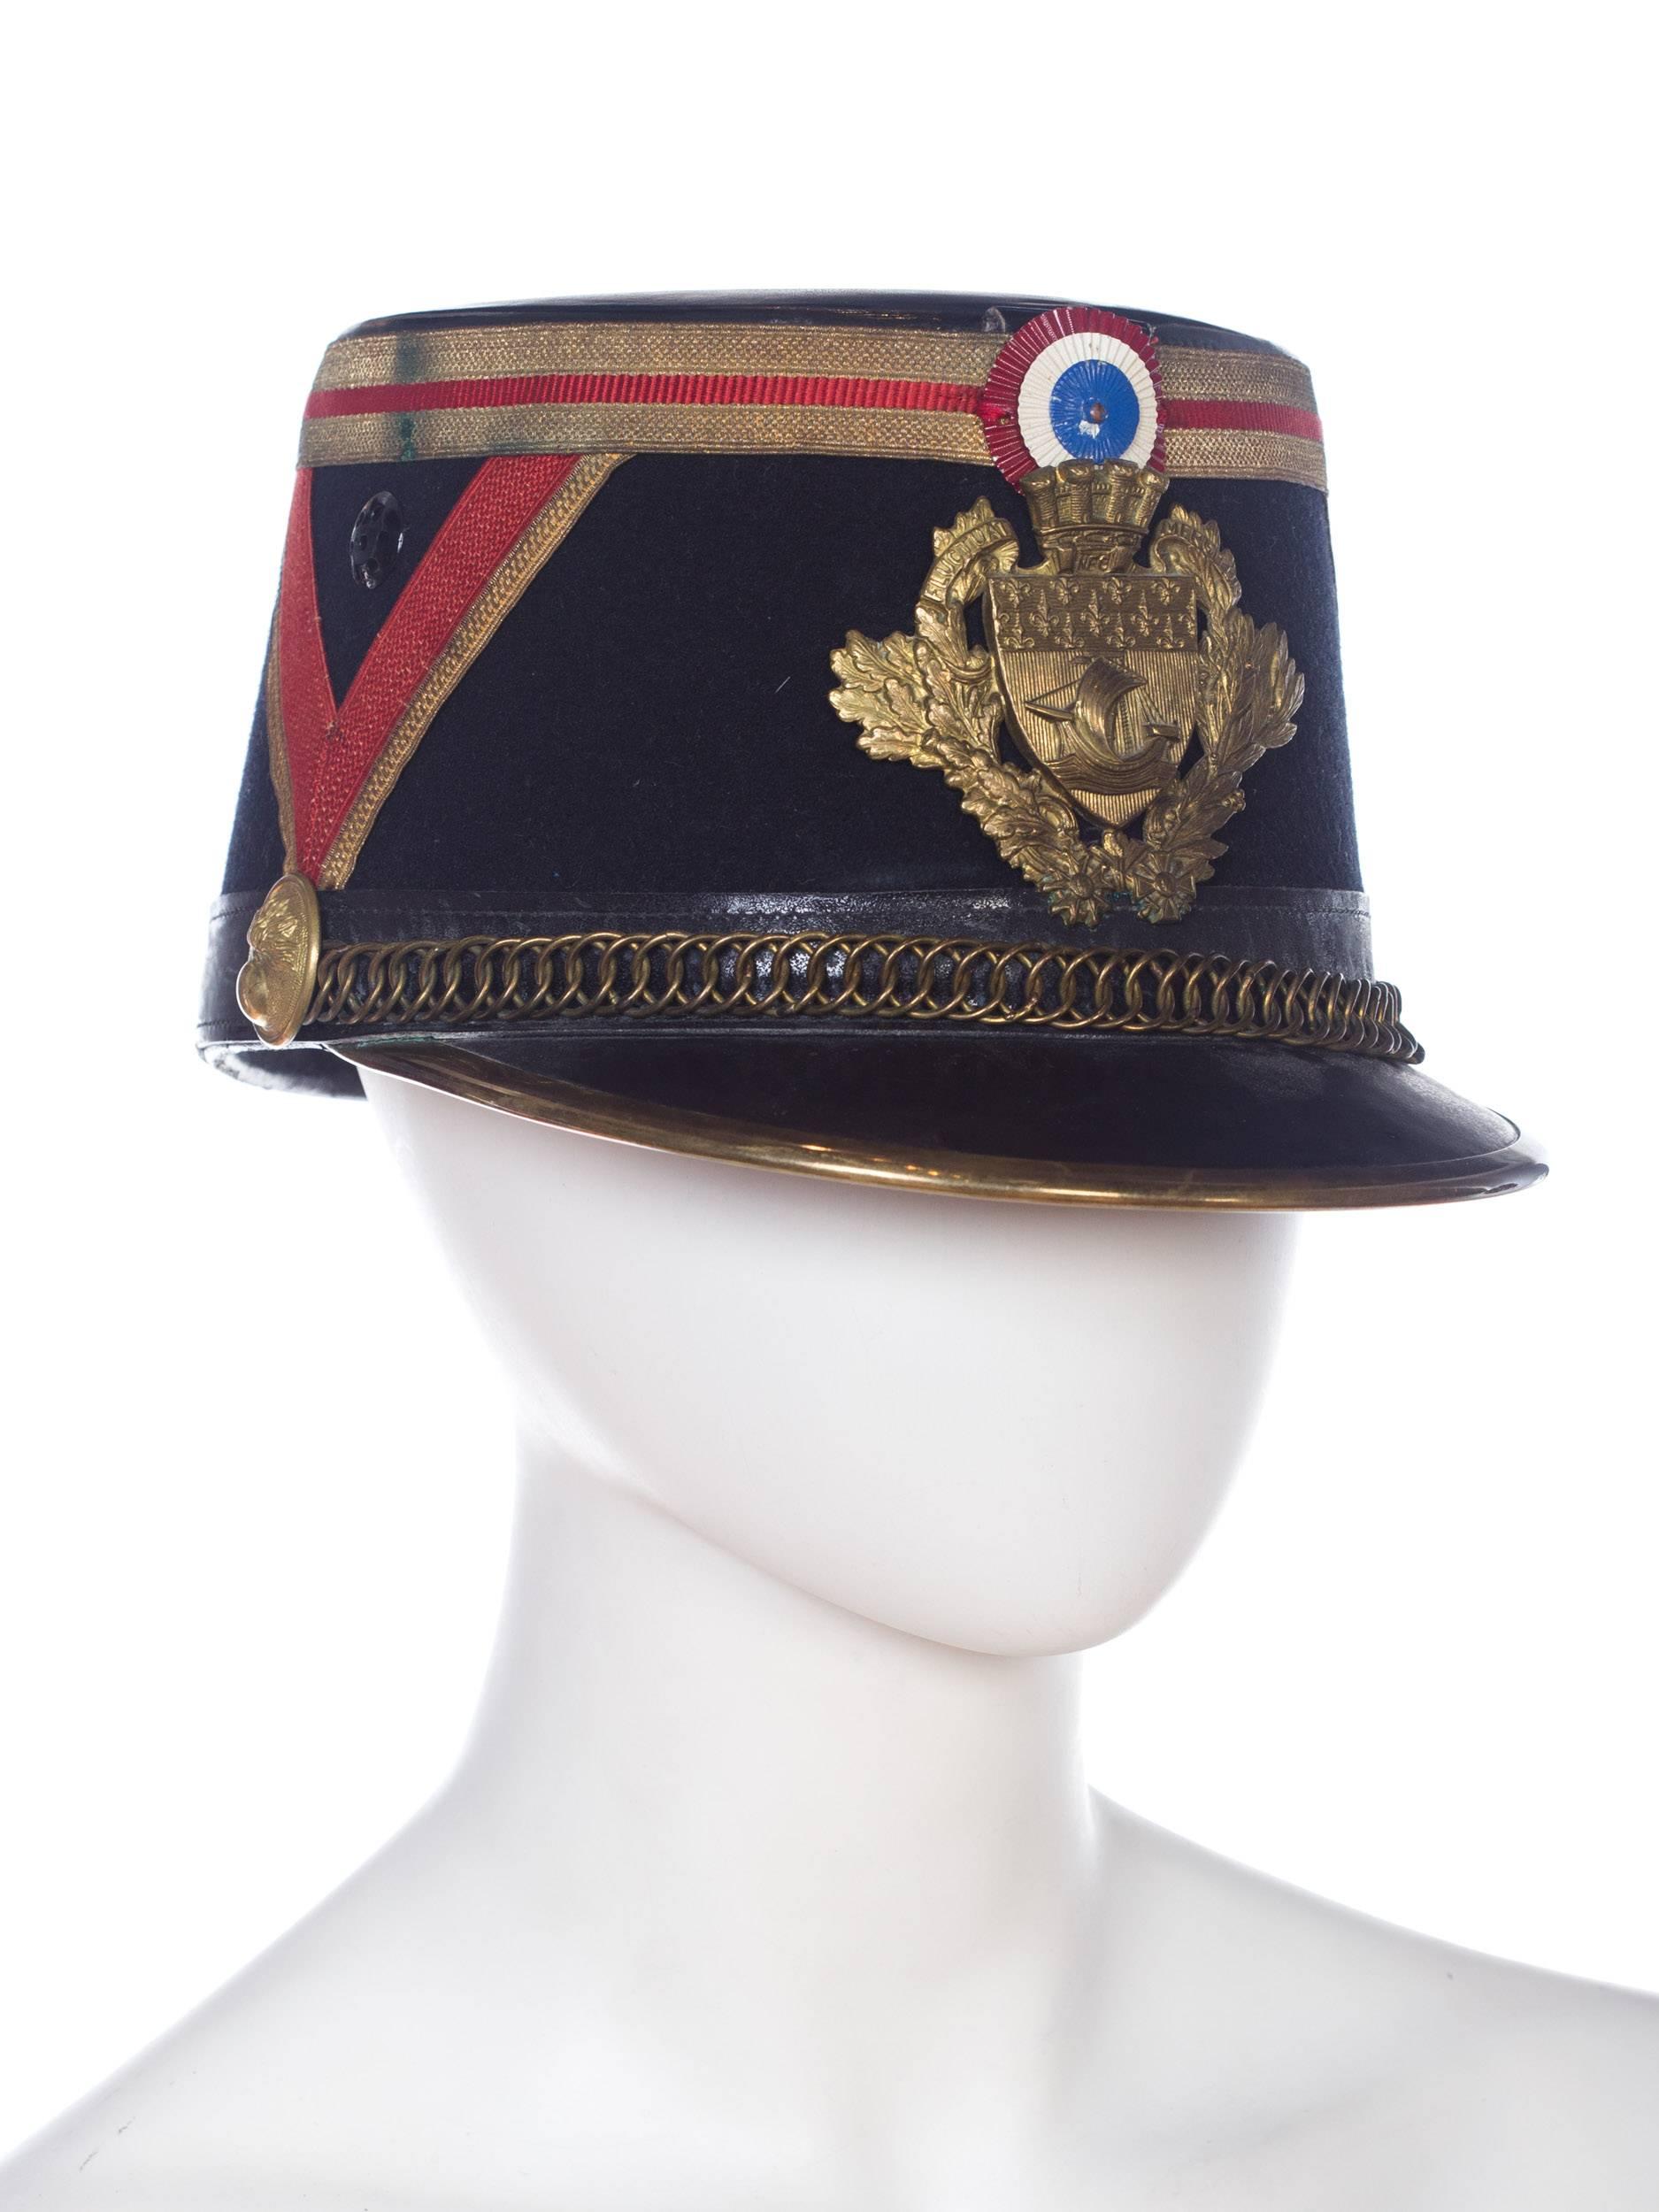 19th century military hats